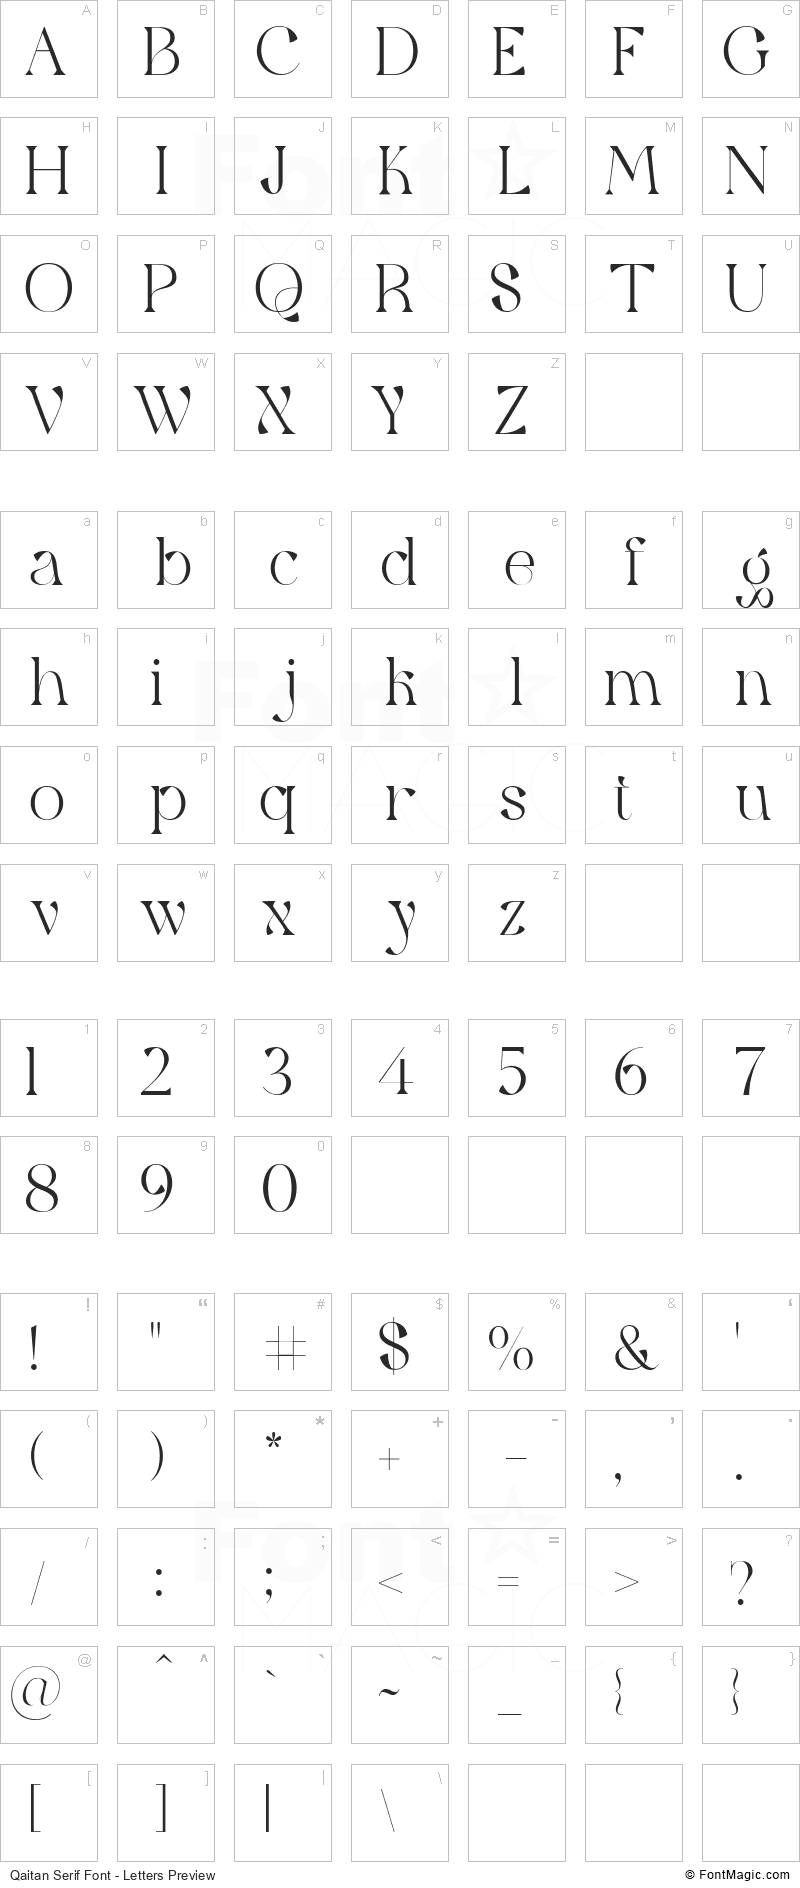 Qaitan Serif Font - All Latters Preview Chart